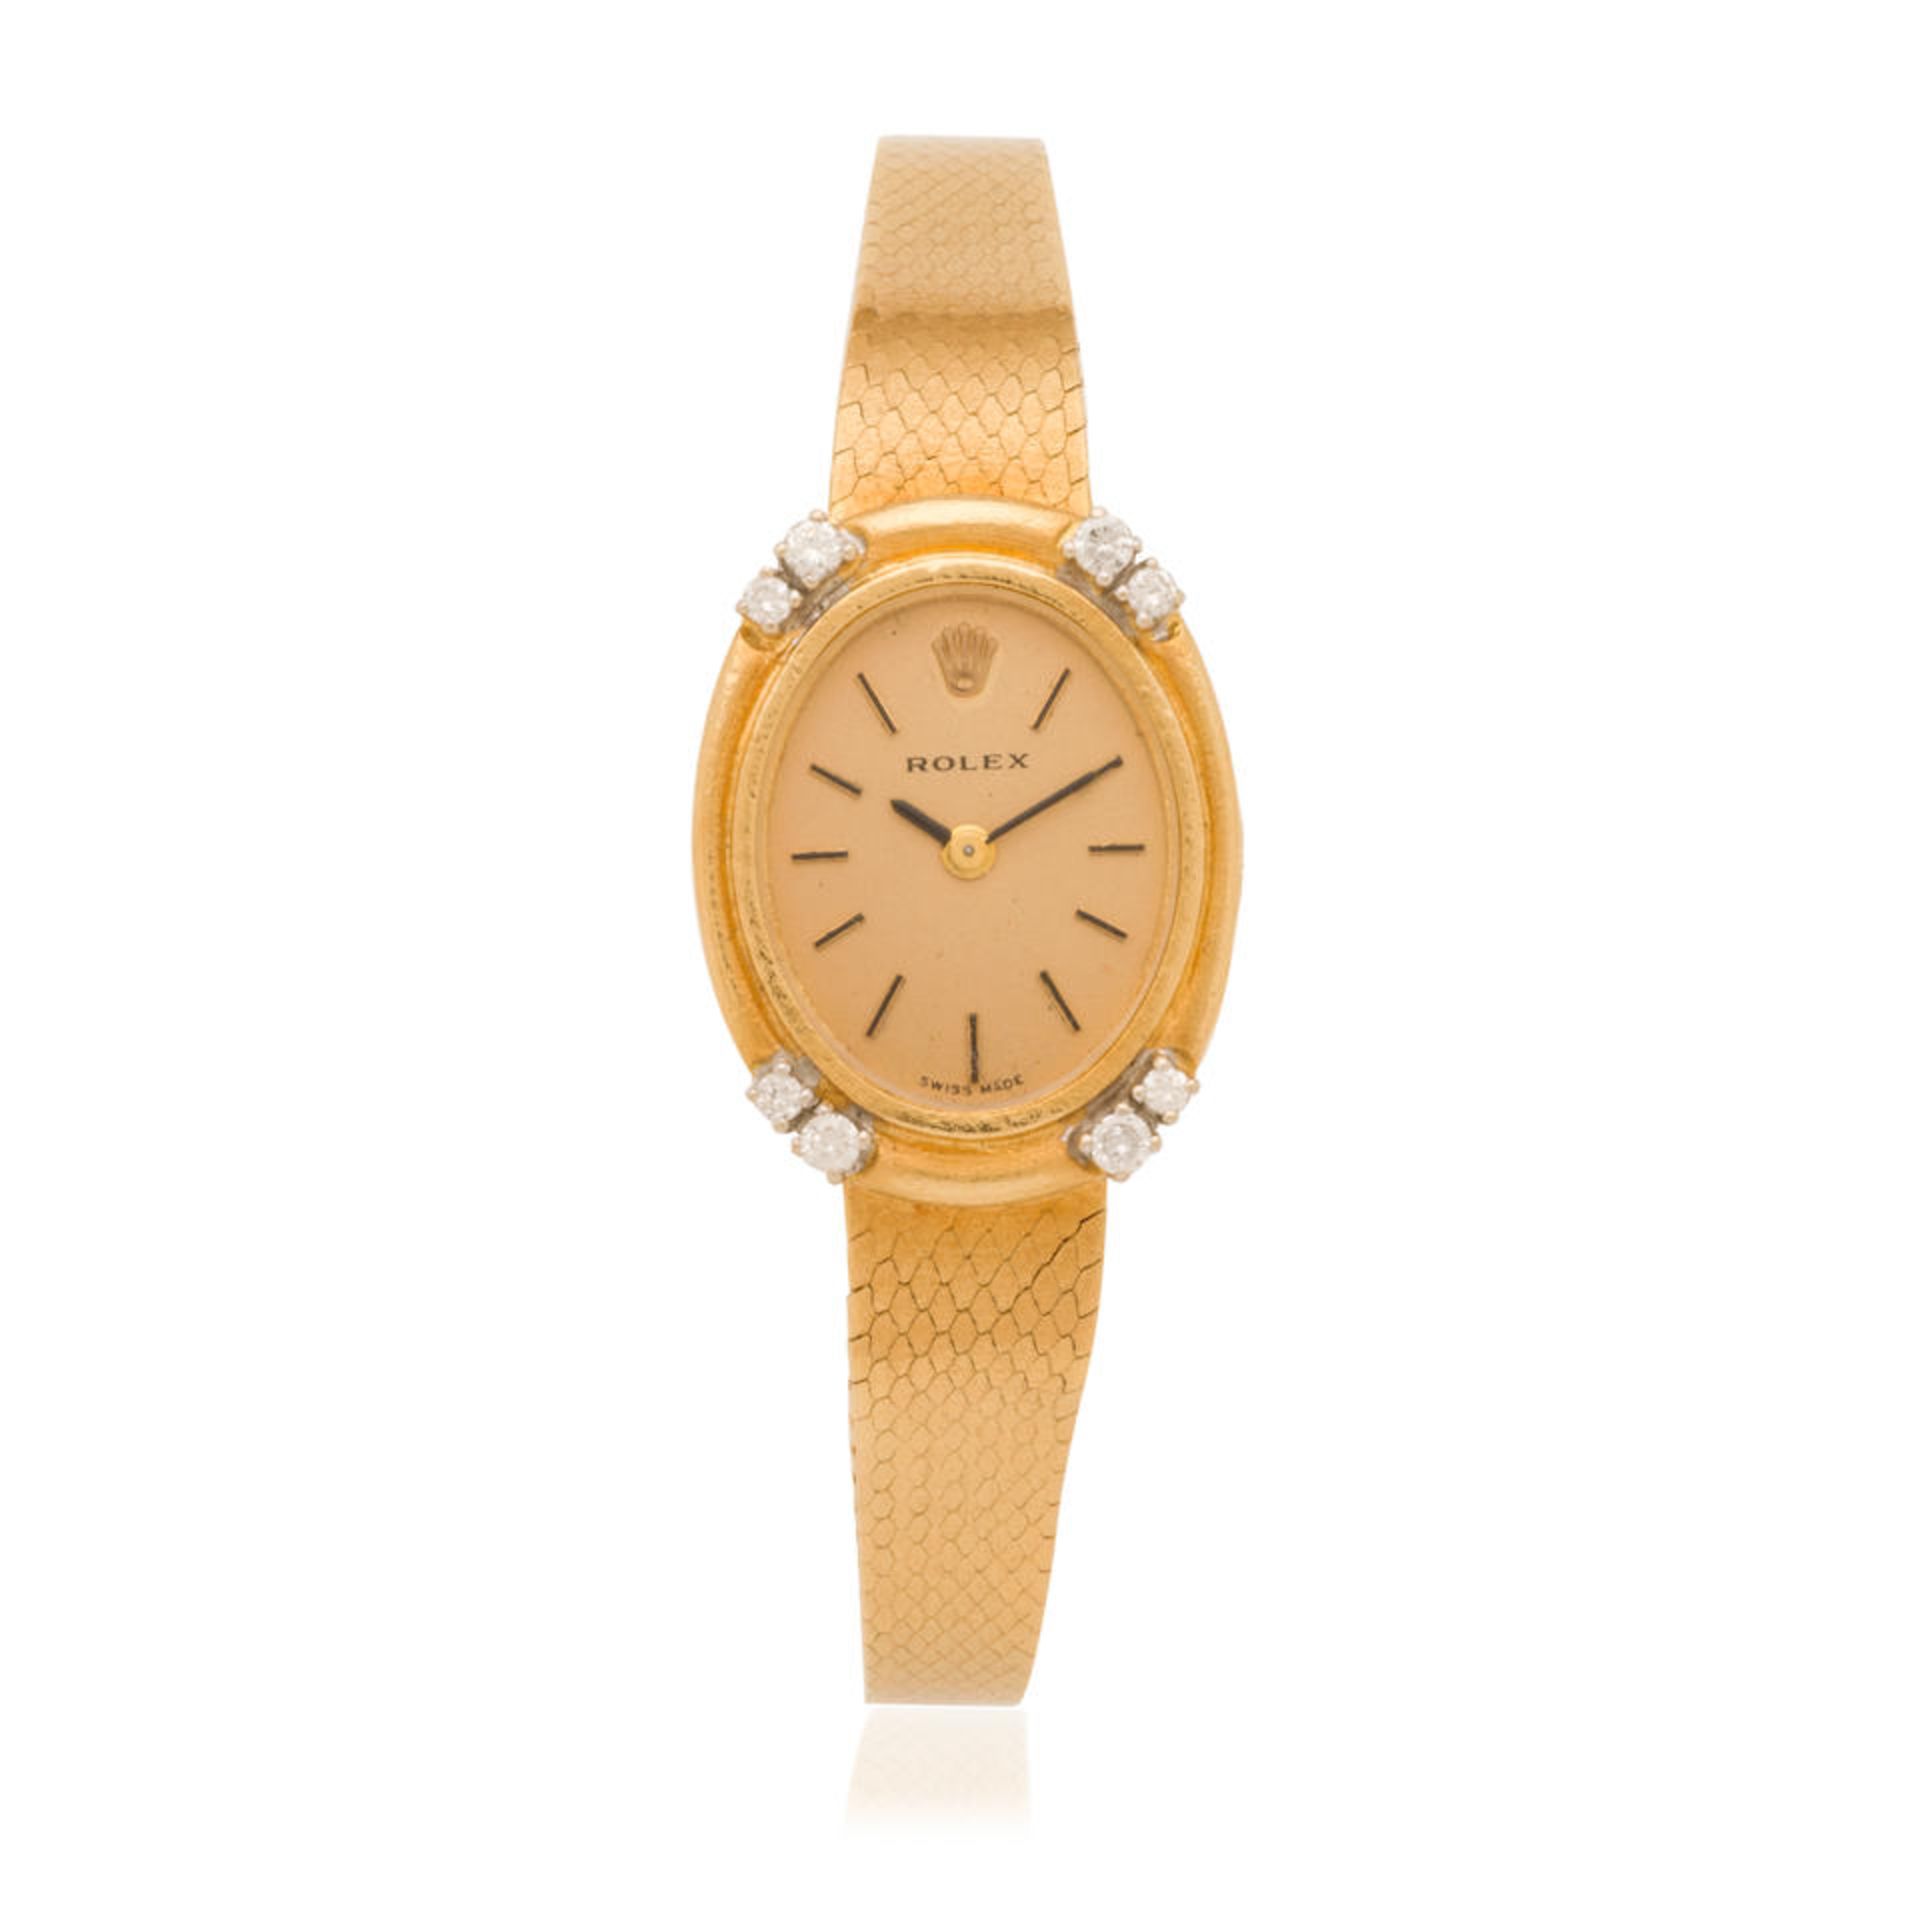 Rolex. A lady's 18K gold and diamond set bezel manual wind bracelet watch Rolex. Montre bracelet...